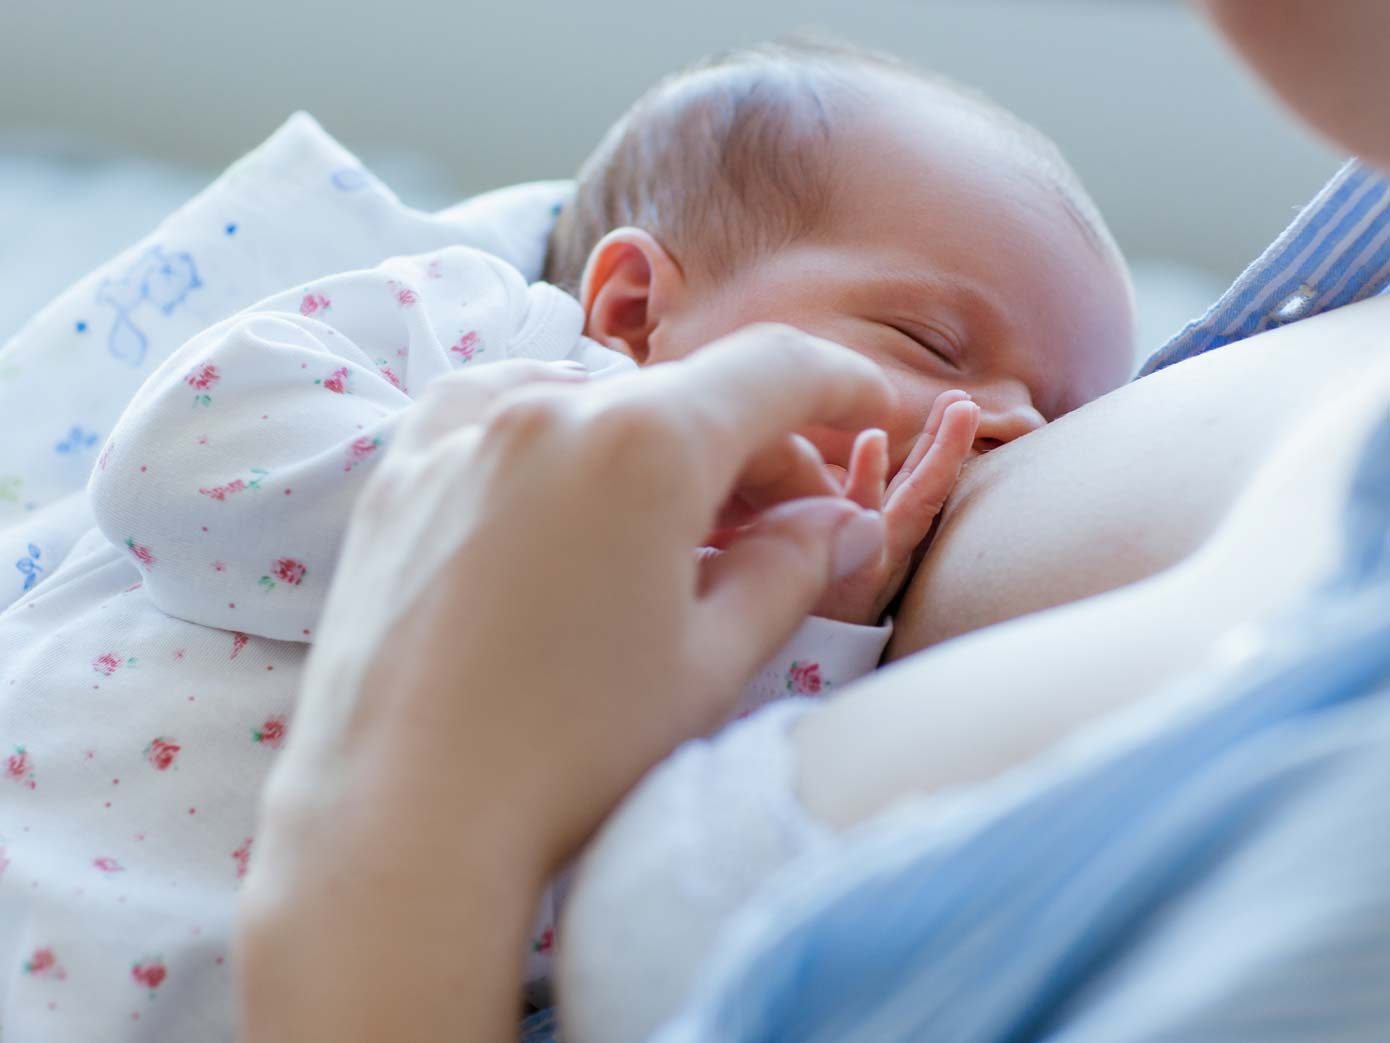 mproving pain management in newborns